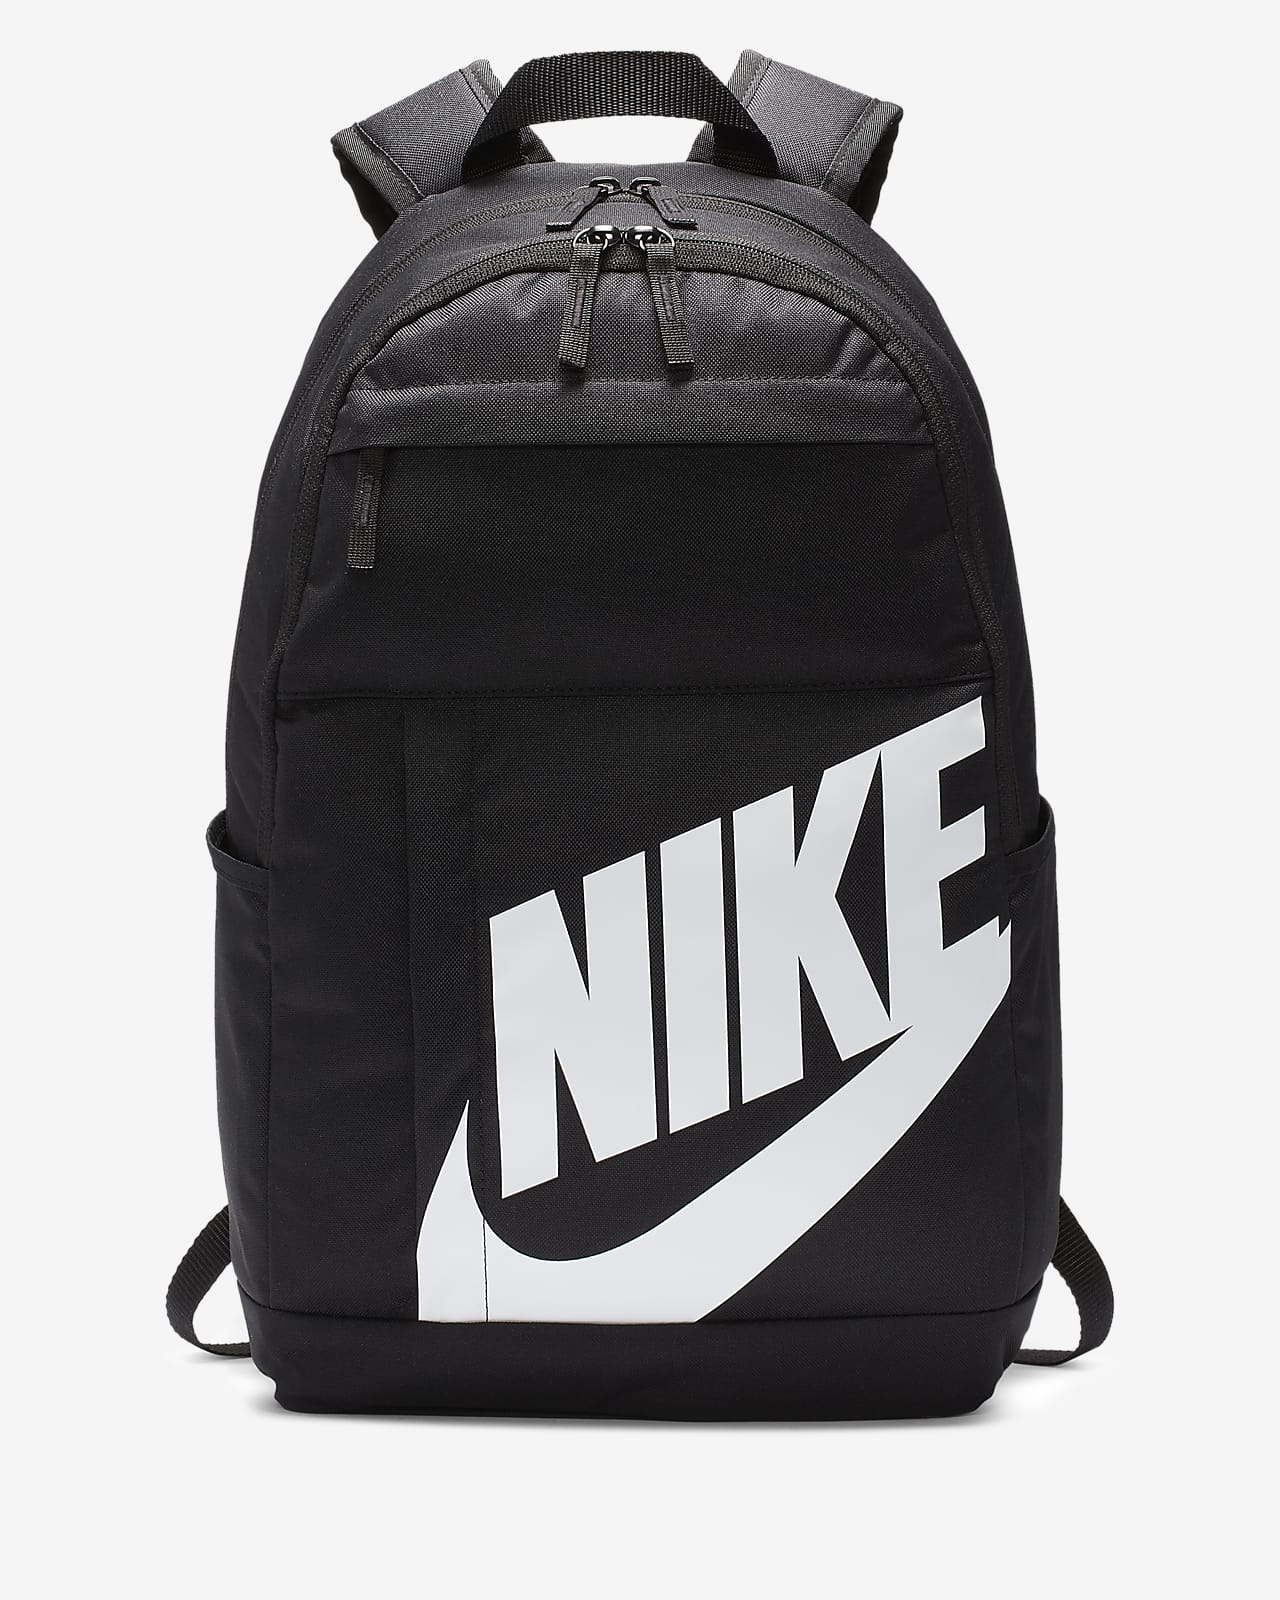 nike elemental backpack price